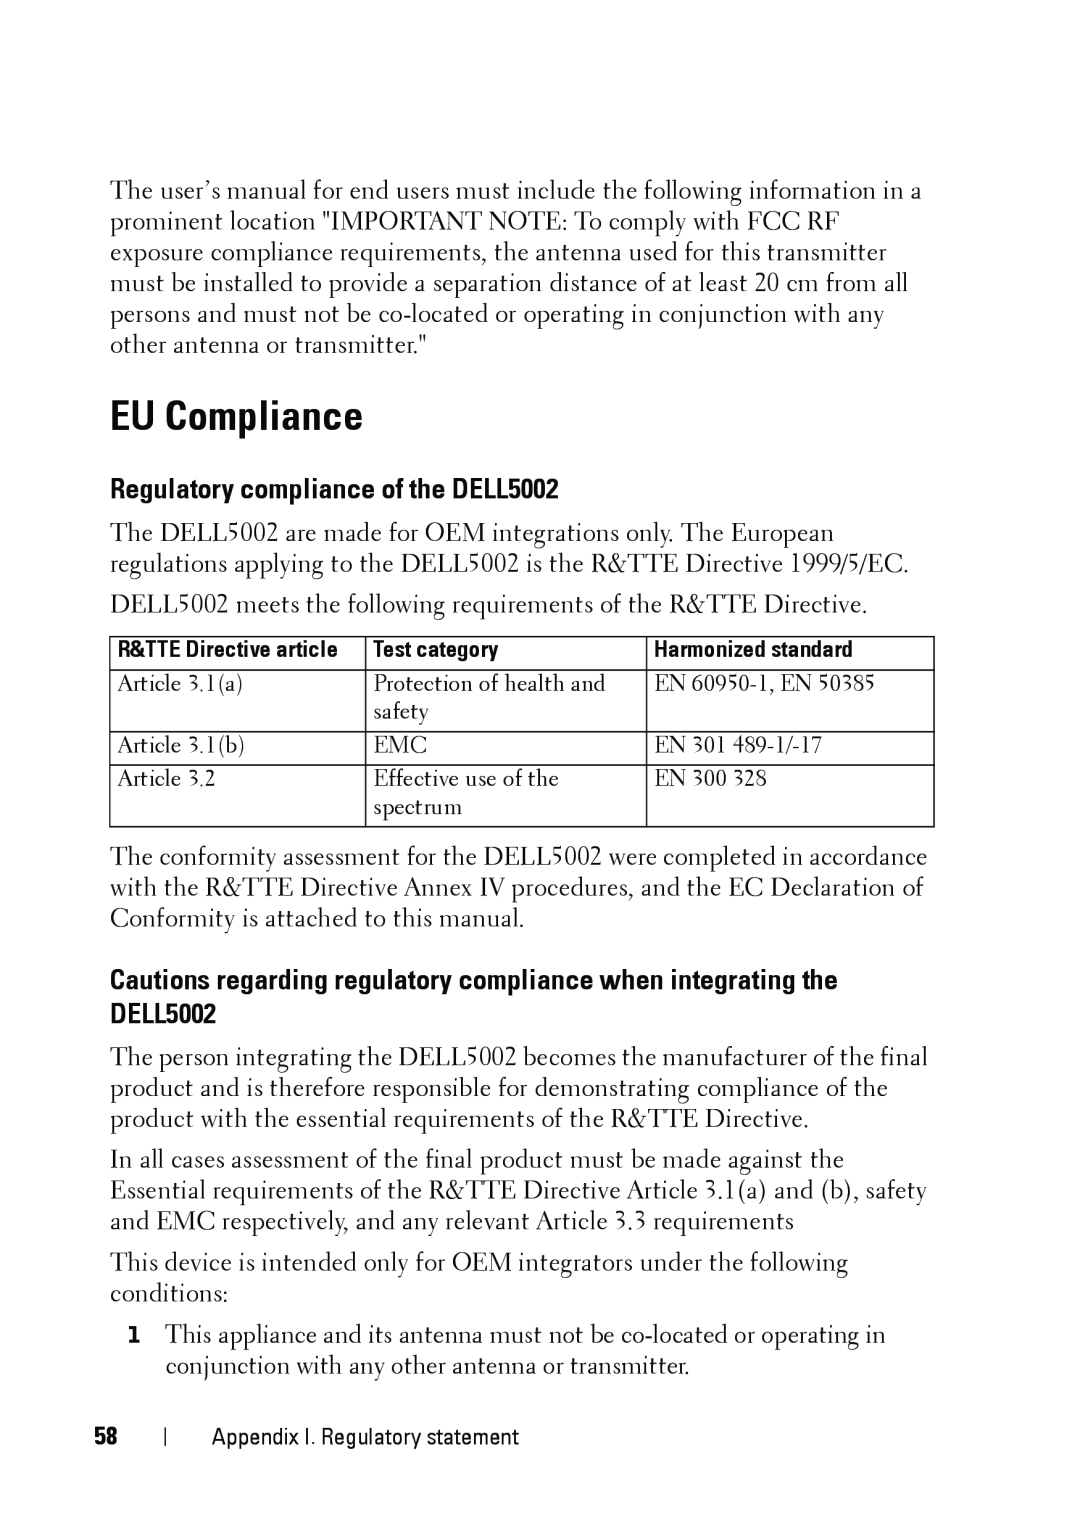 Dell manual EU Compliance, Regulatory compliance of the DELL5002 